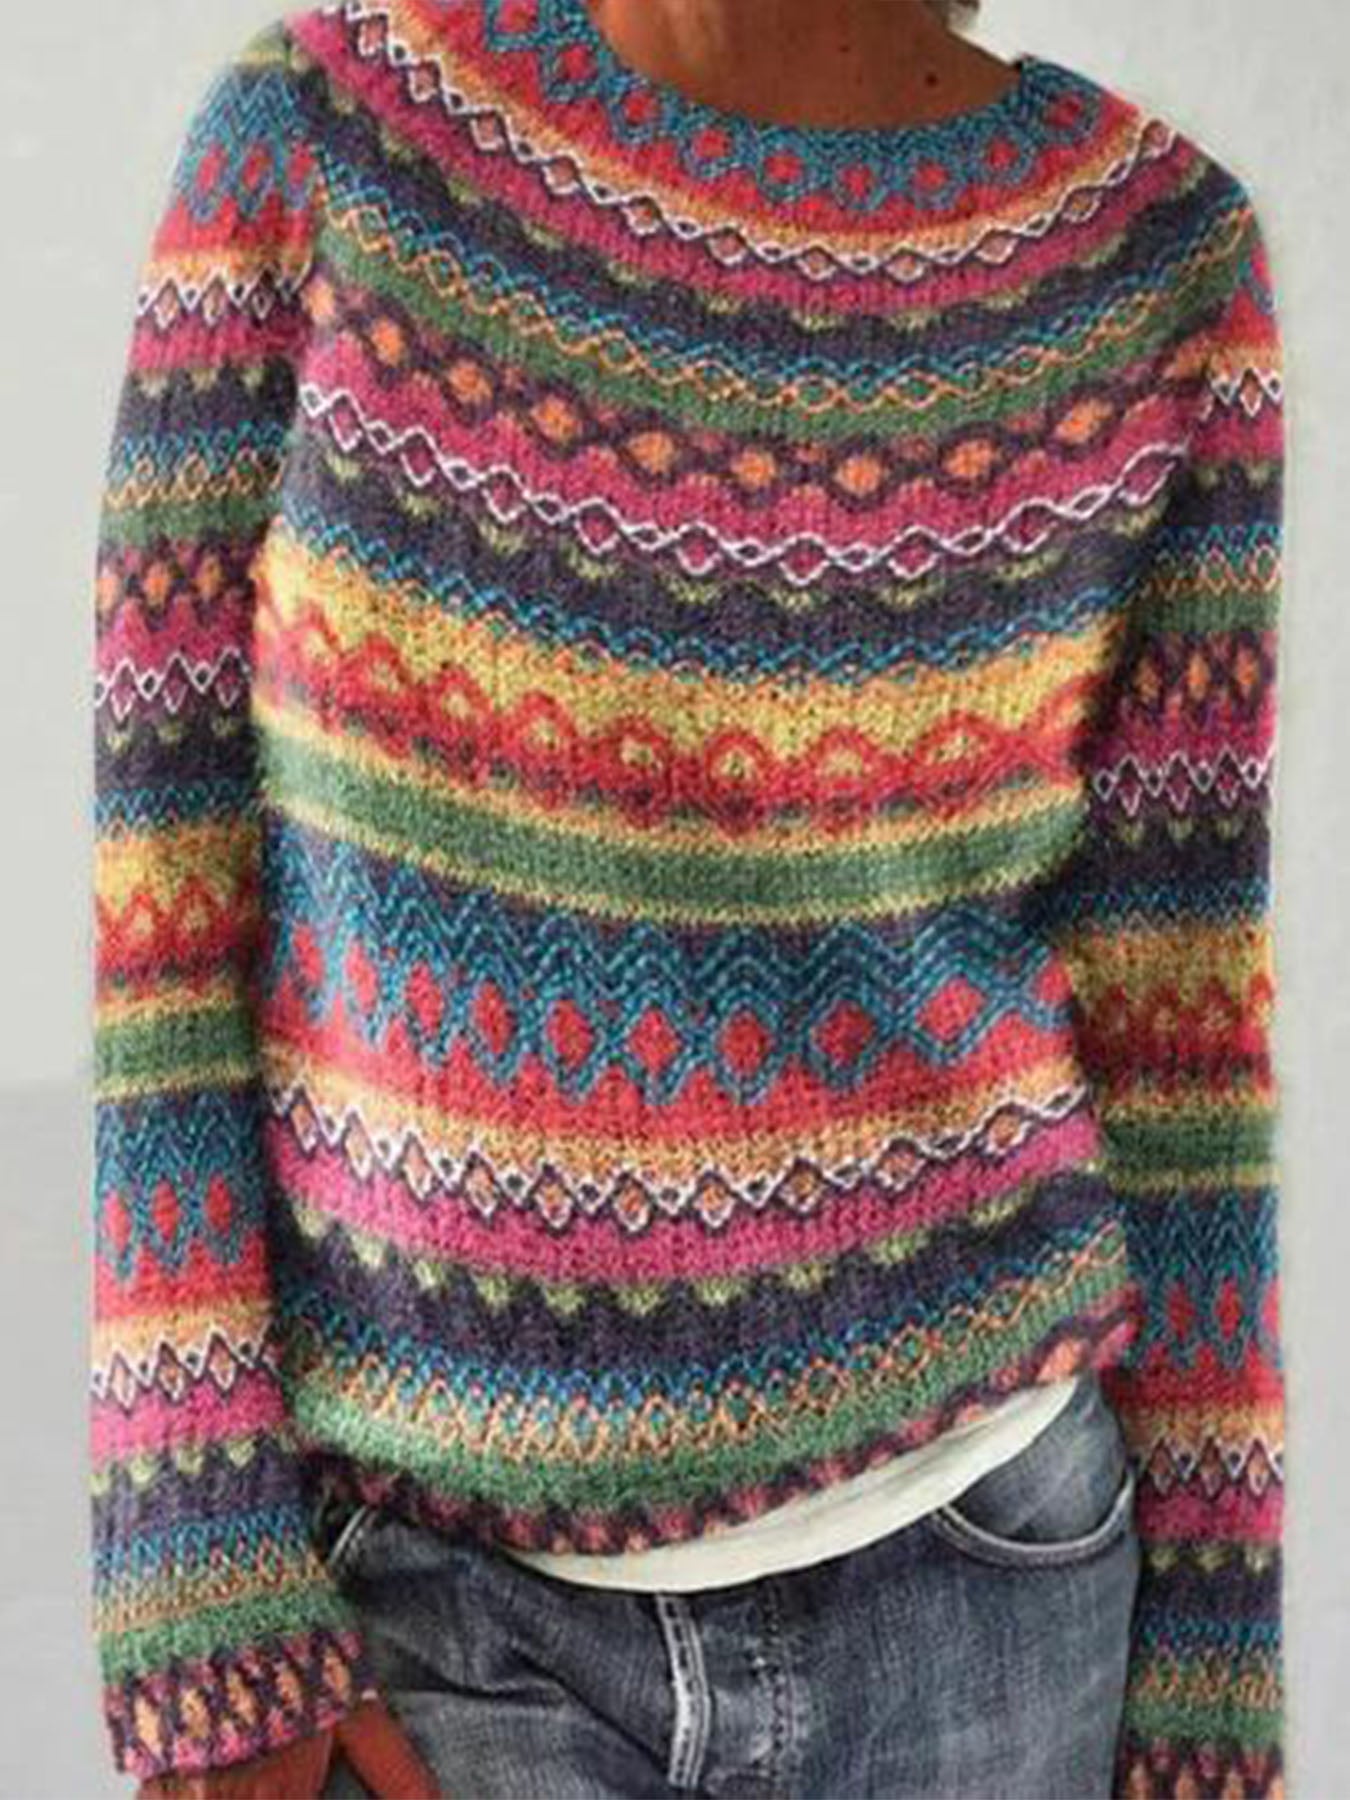 Vorioal Warm Knit Pullover